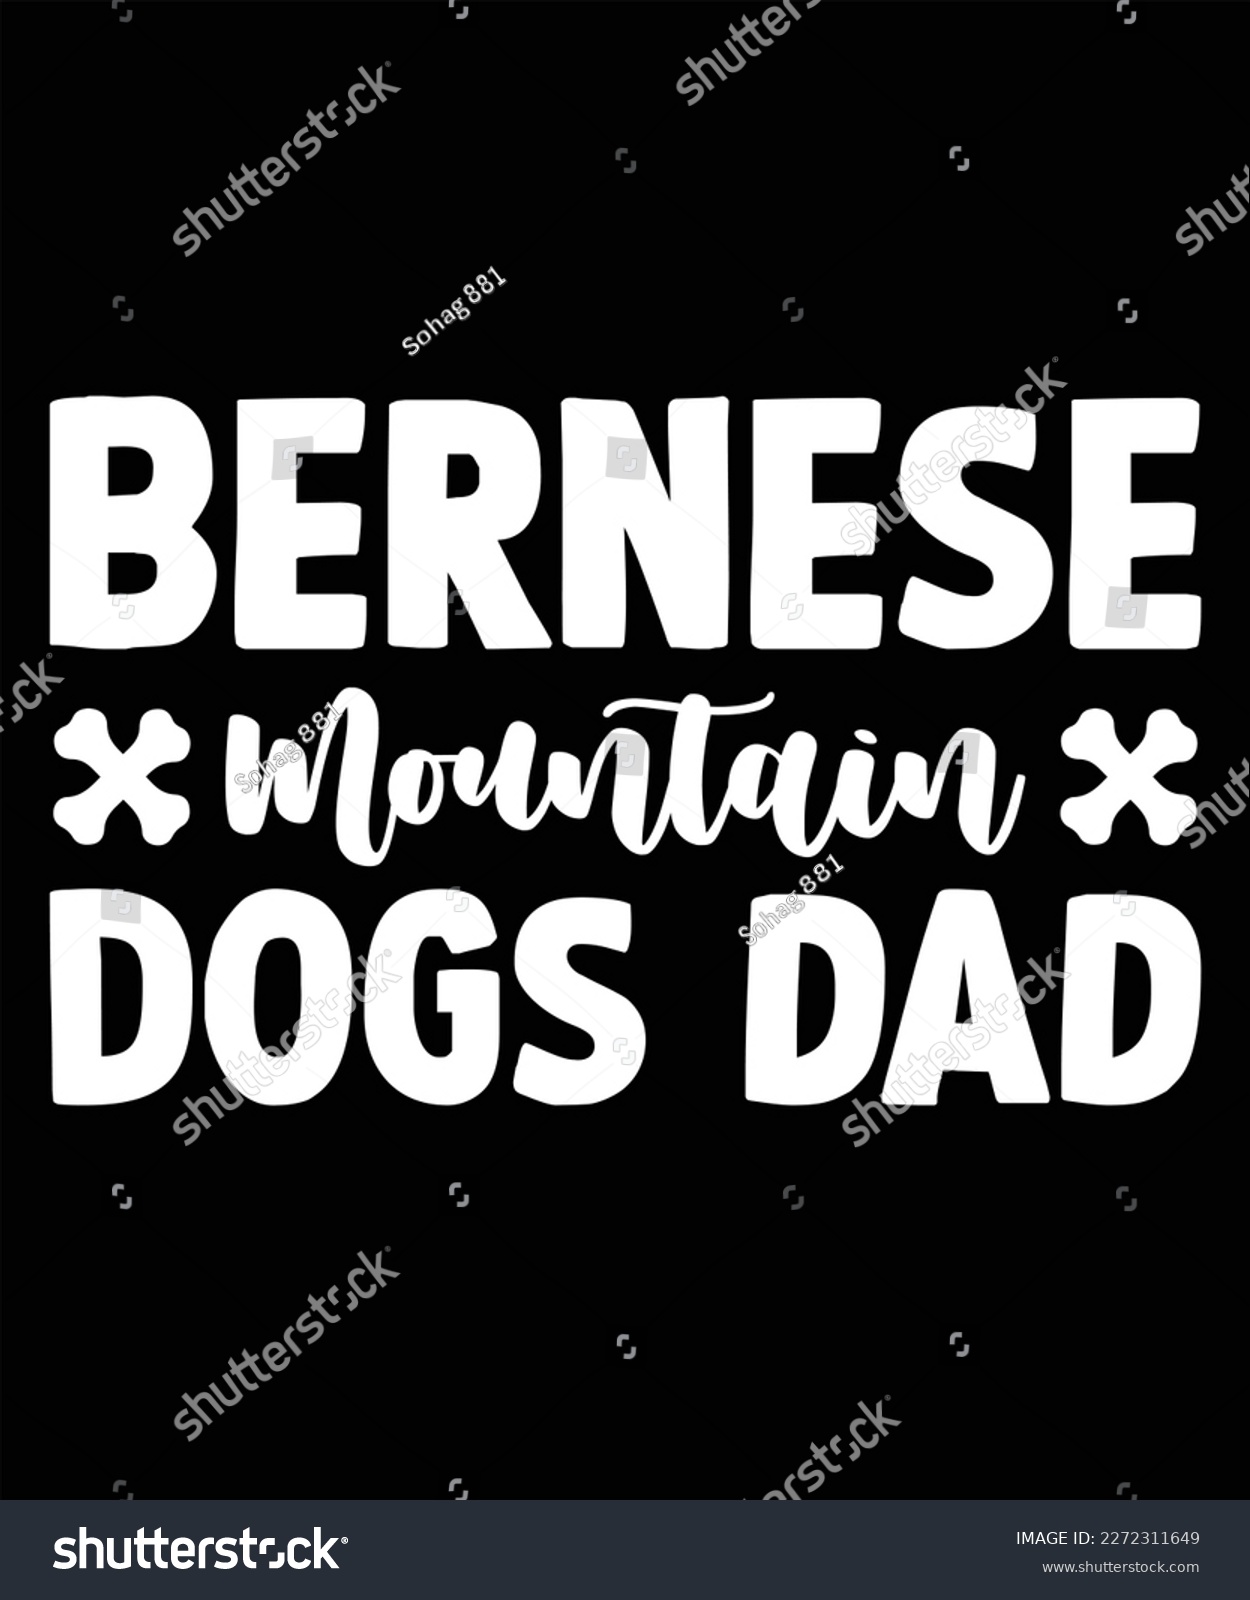 SVG of Bernese Mountain Dogs dad
SVG Design svg